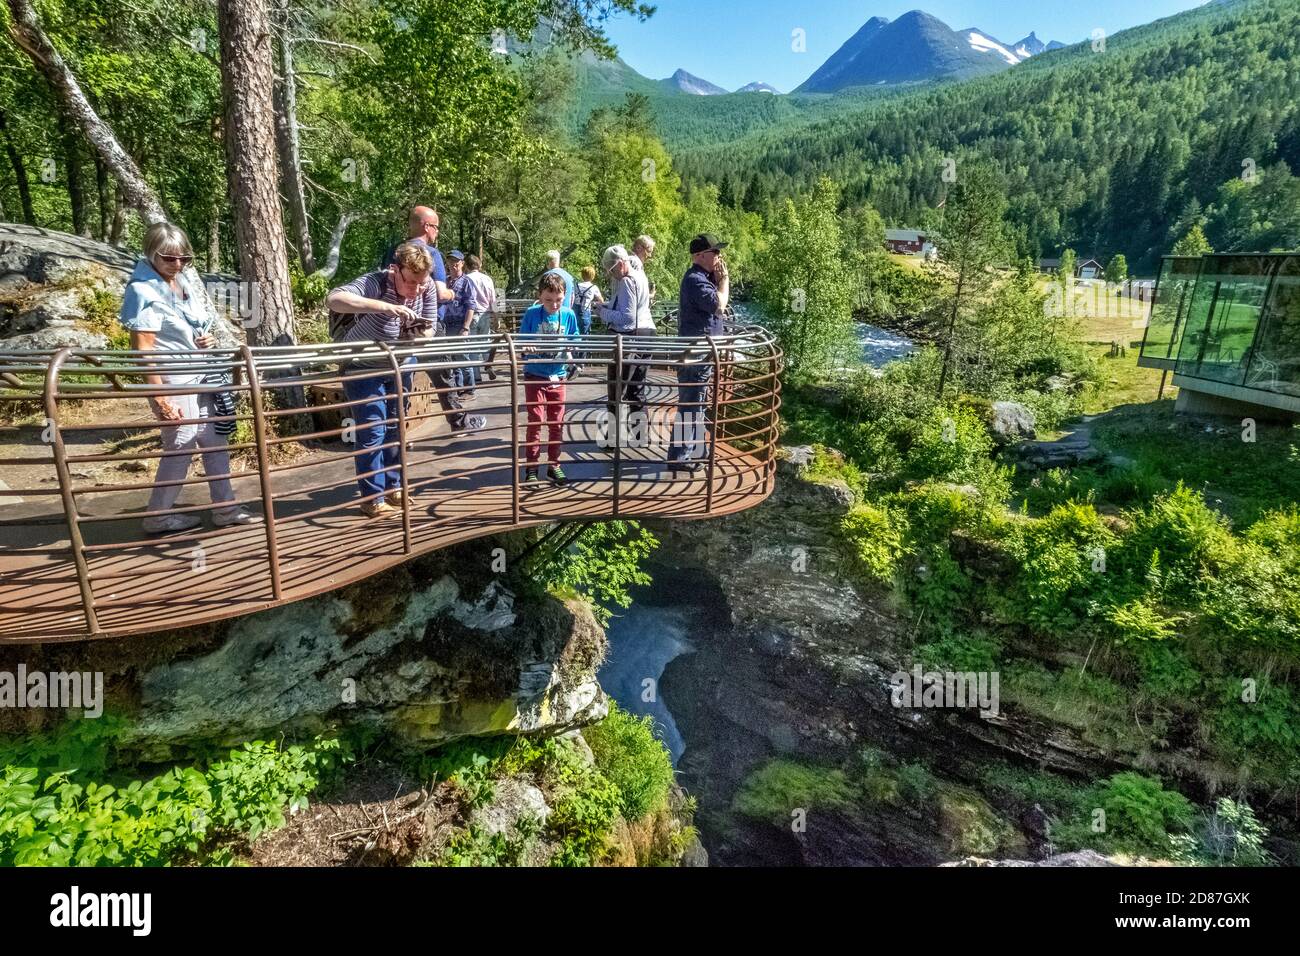 Gudbrandsjuvet Gorge, River Valldøla, Viewing platform with tourists, Valldal, Tafjord, Møre og Romsdal, Norway, Scandinavia, Europe, adventure trip, Stock Photo